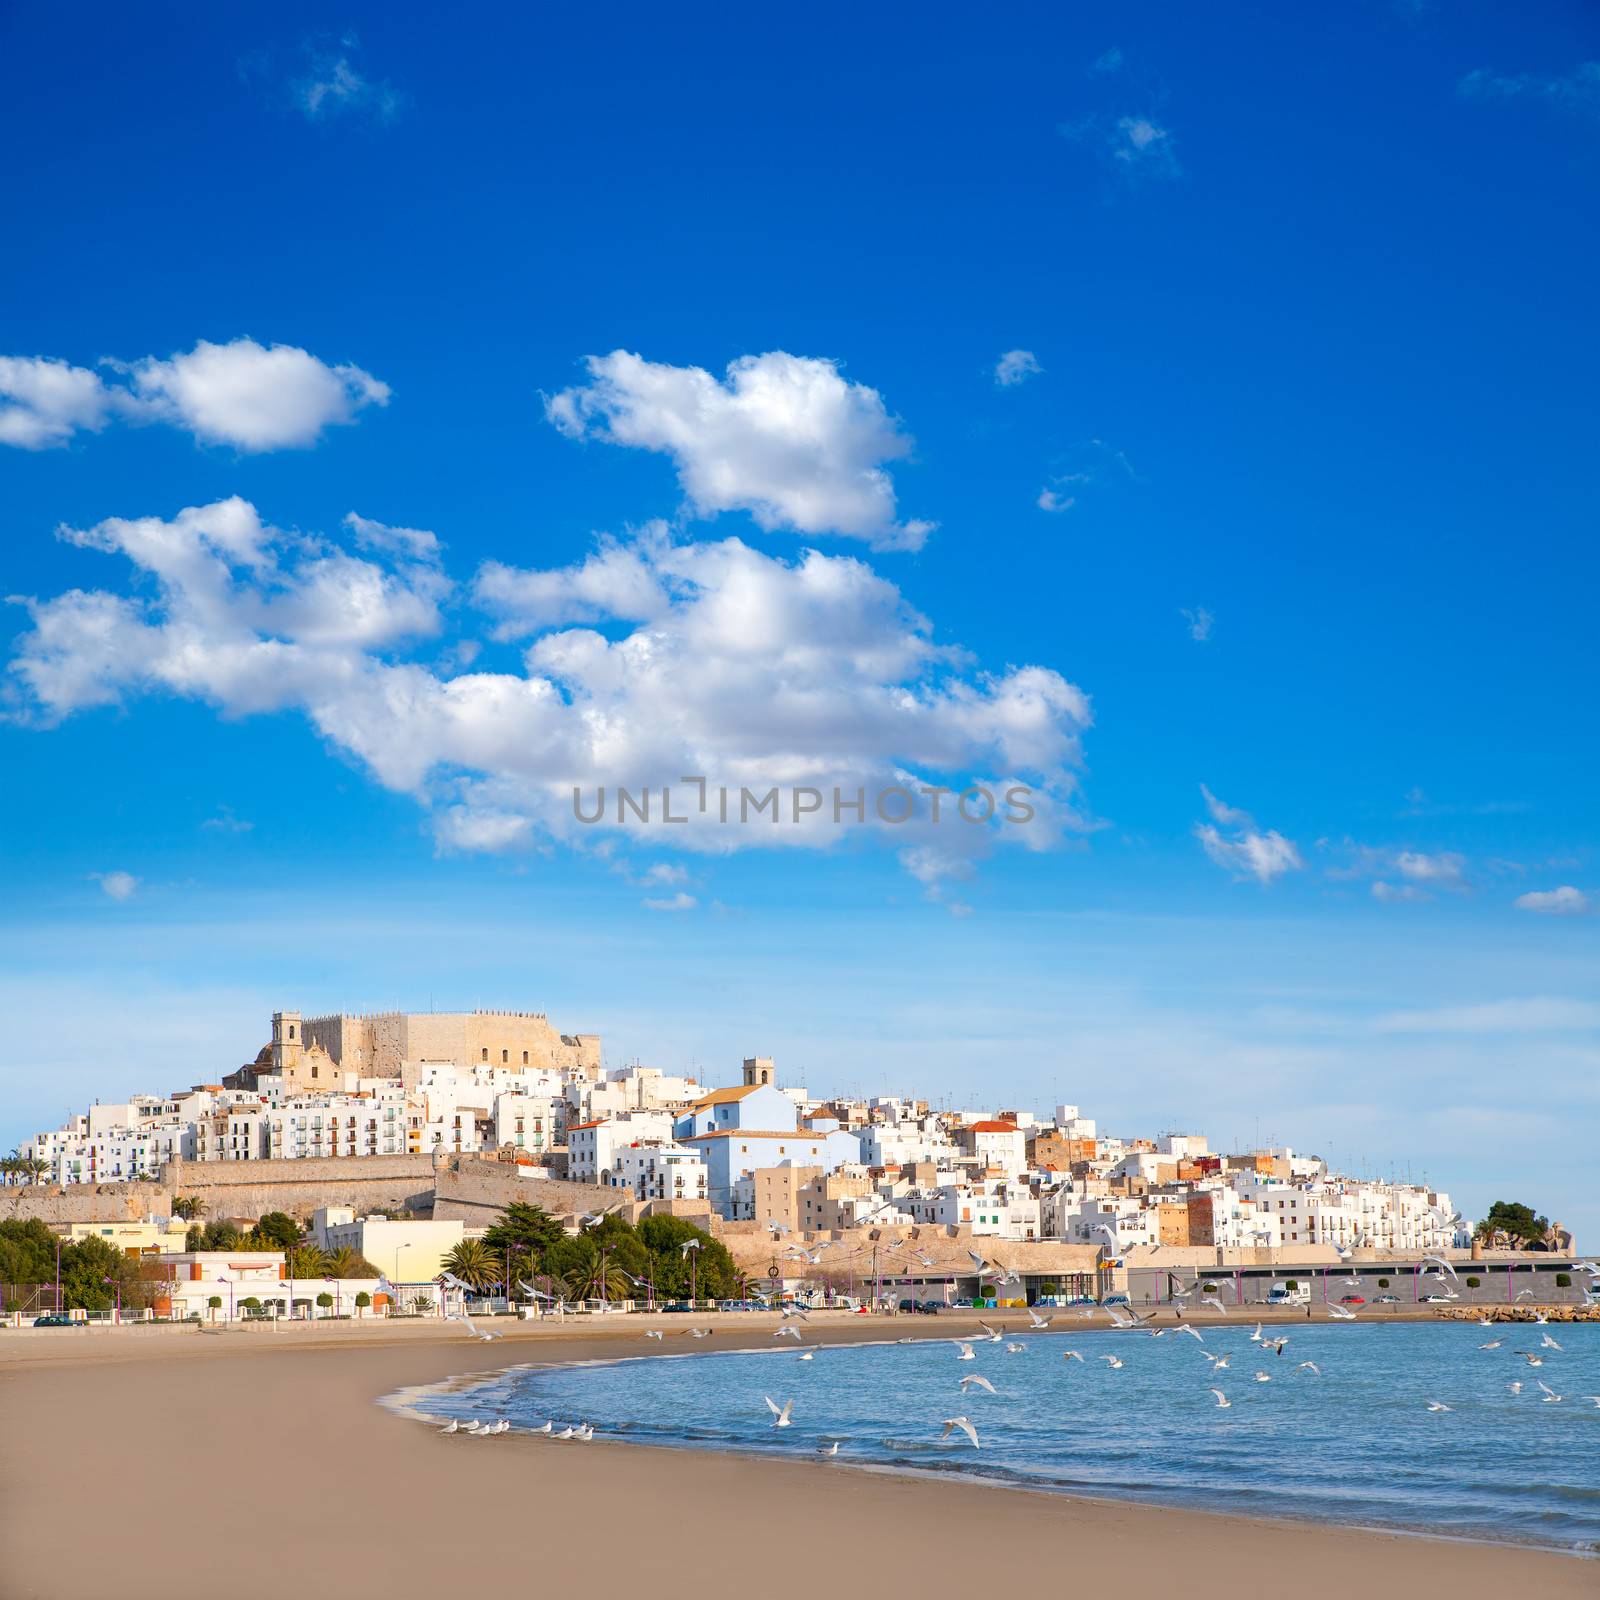 Peniscola Castle and beach in Castellon Spain by lunamarina